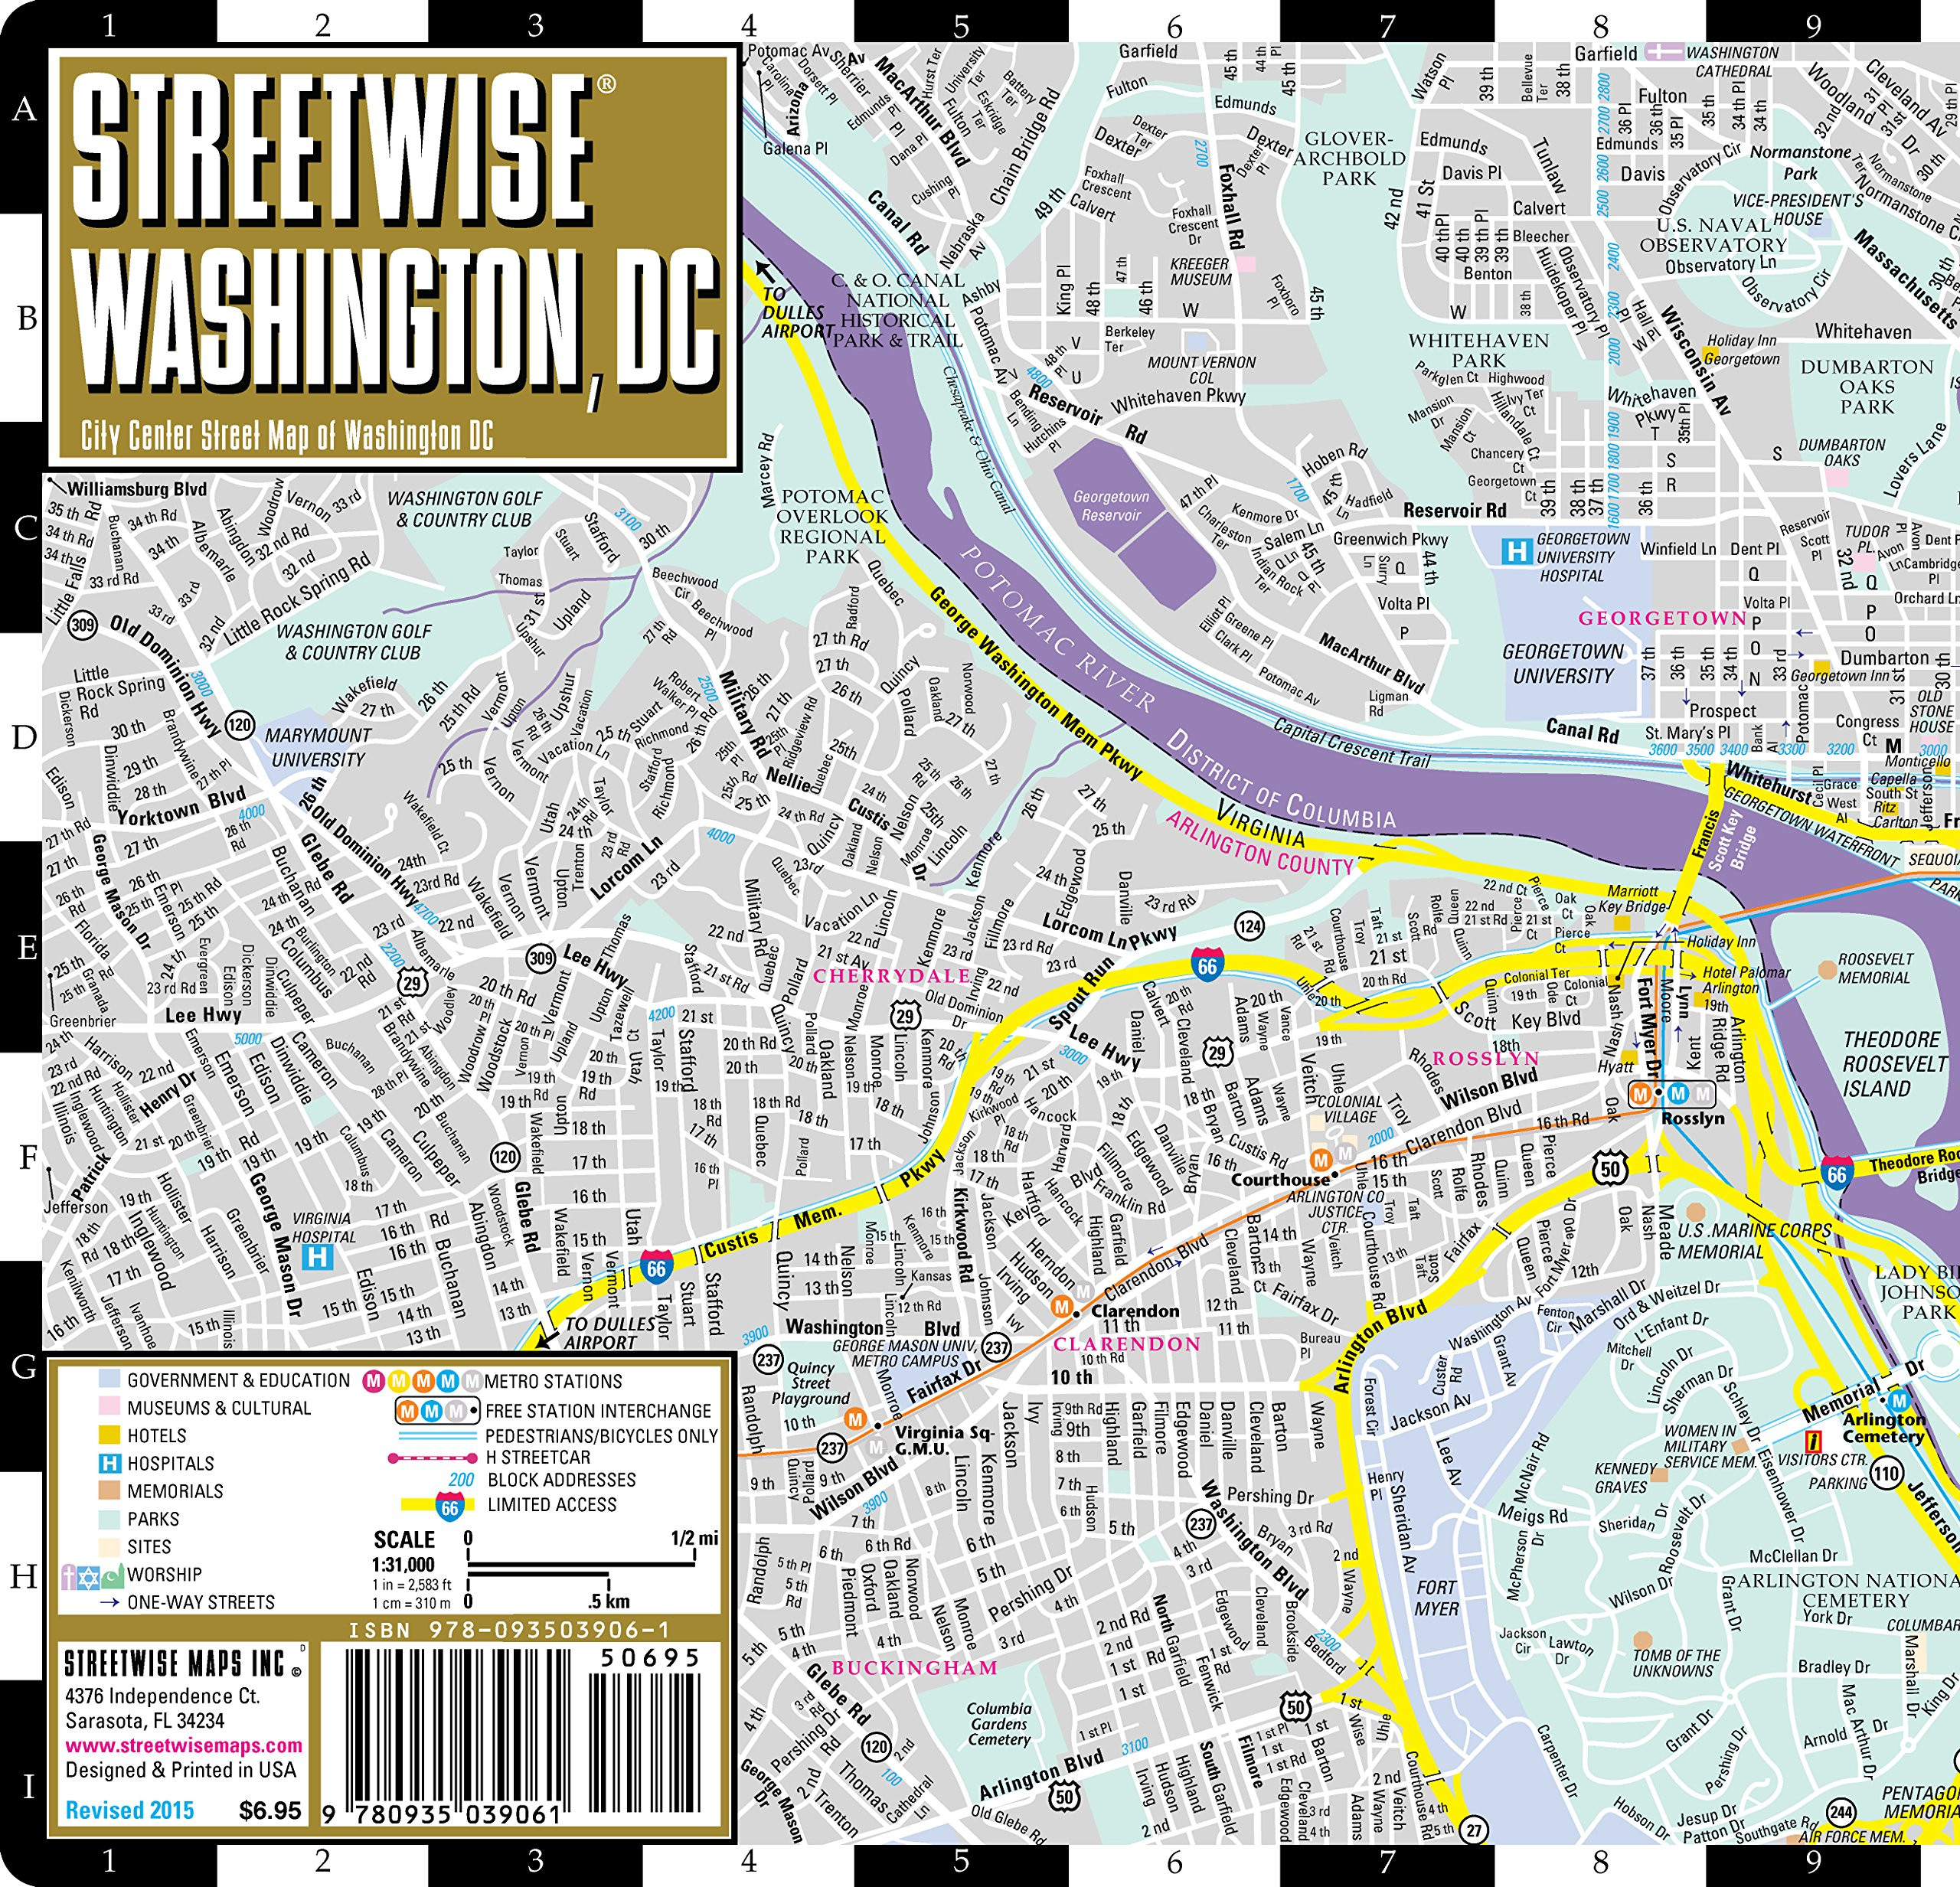 Washington D.c. Printable Map Fresh Streetwise Washington Dc Map Laminated City Center Street Map Of